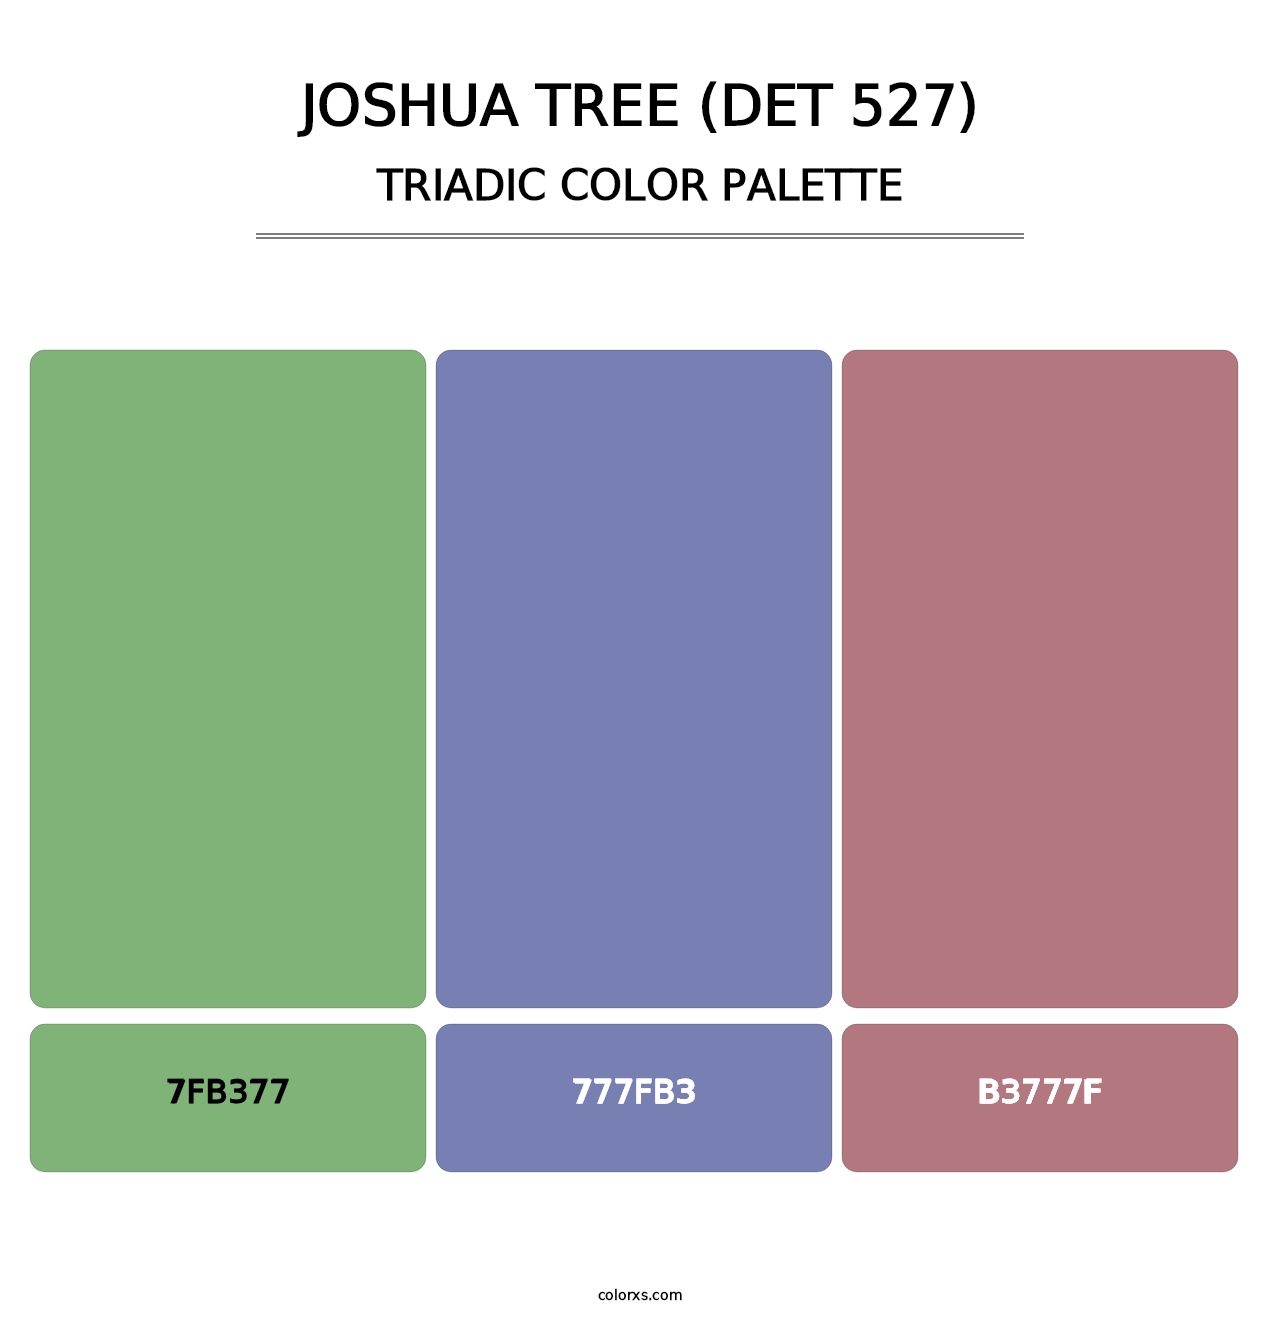 Joshua Tree (DET 527) - Triadic Color Palette